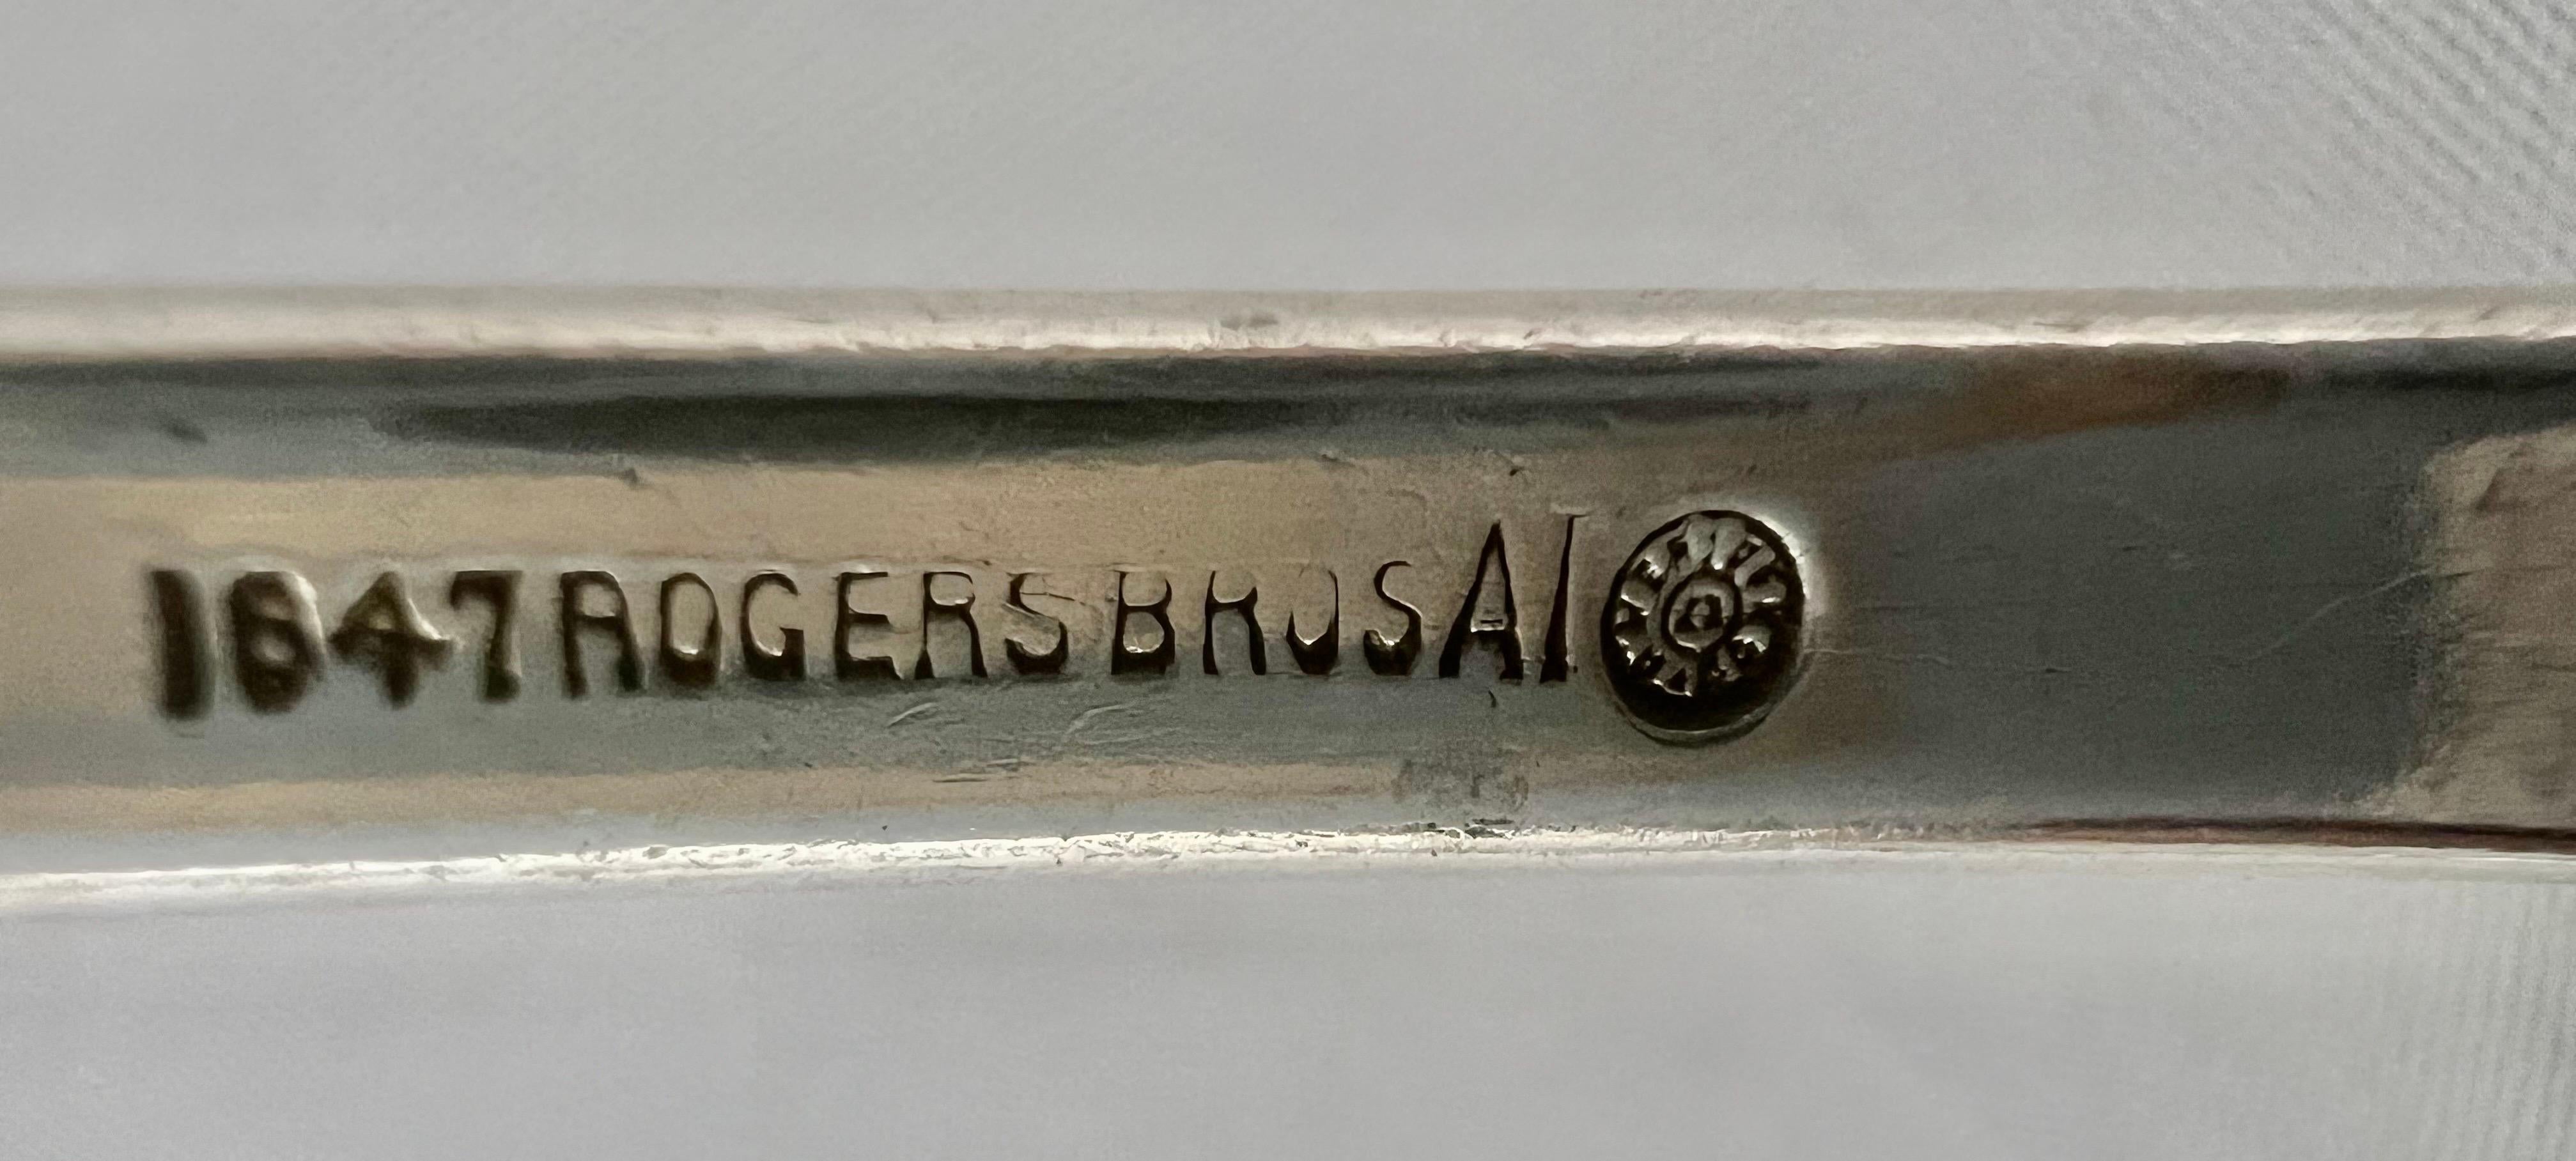 1847 rogers bros spoon